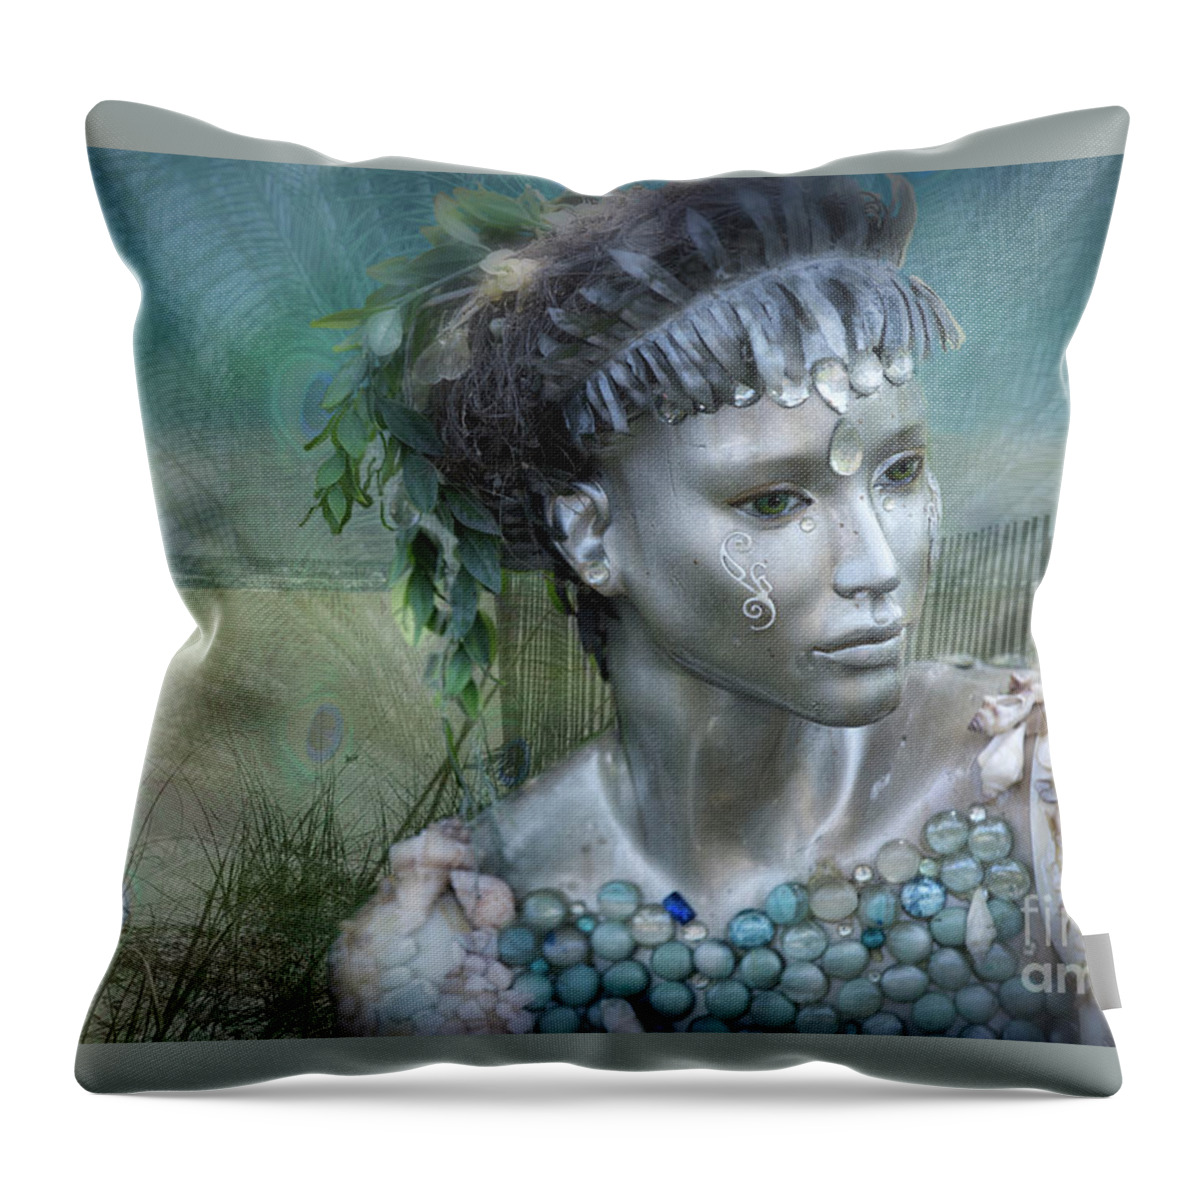 Mermaids Throw Pillow featuring the digital art Mermaiden Fantasea by Mary Lou Chmura